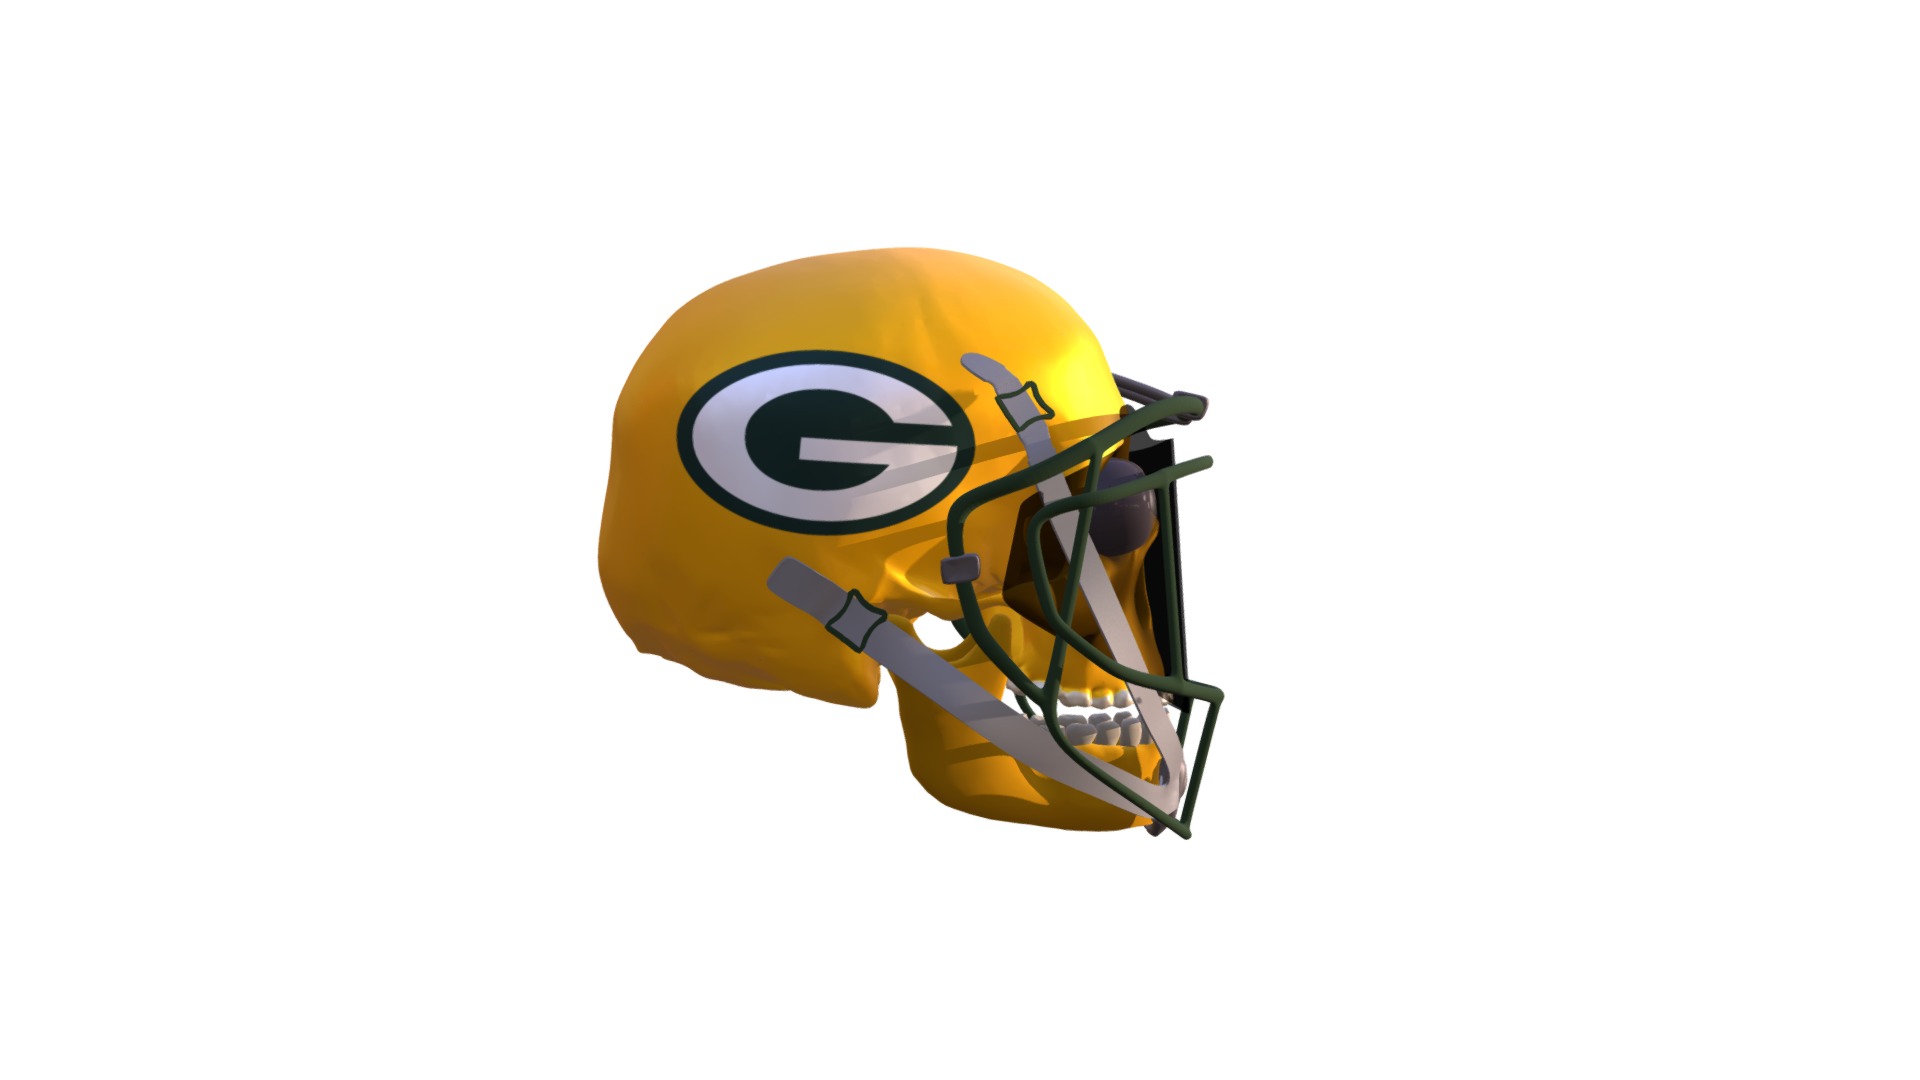 3D model Green Bay Packers NFL Football Helmet - This is a 3D model of the Green Bay Packers NFL Football Helmet. The 3D model is about a yellow and black logo.